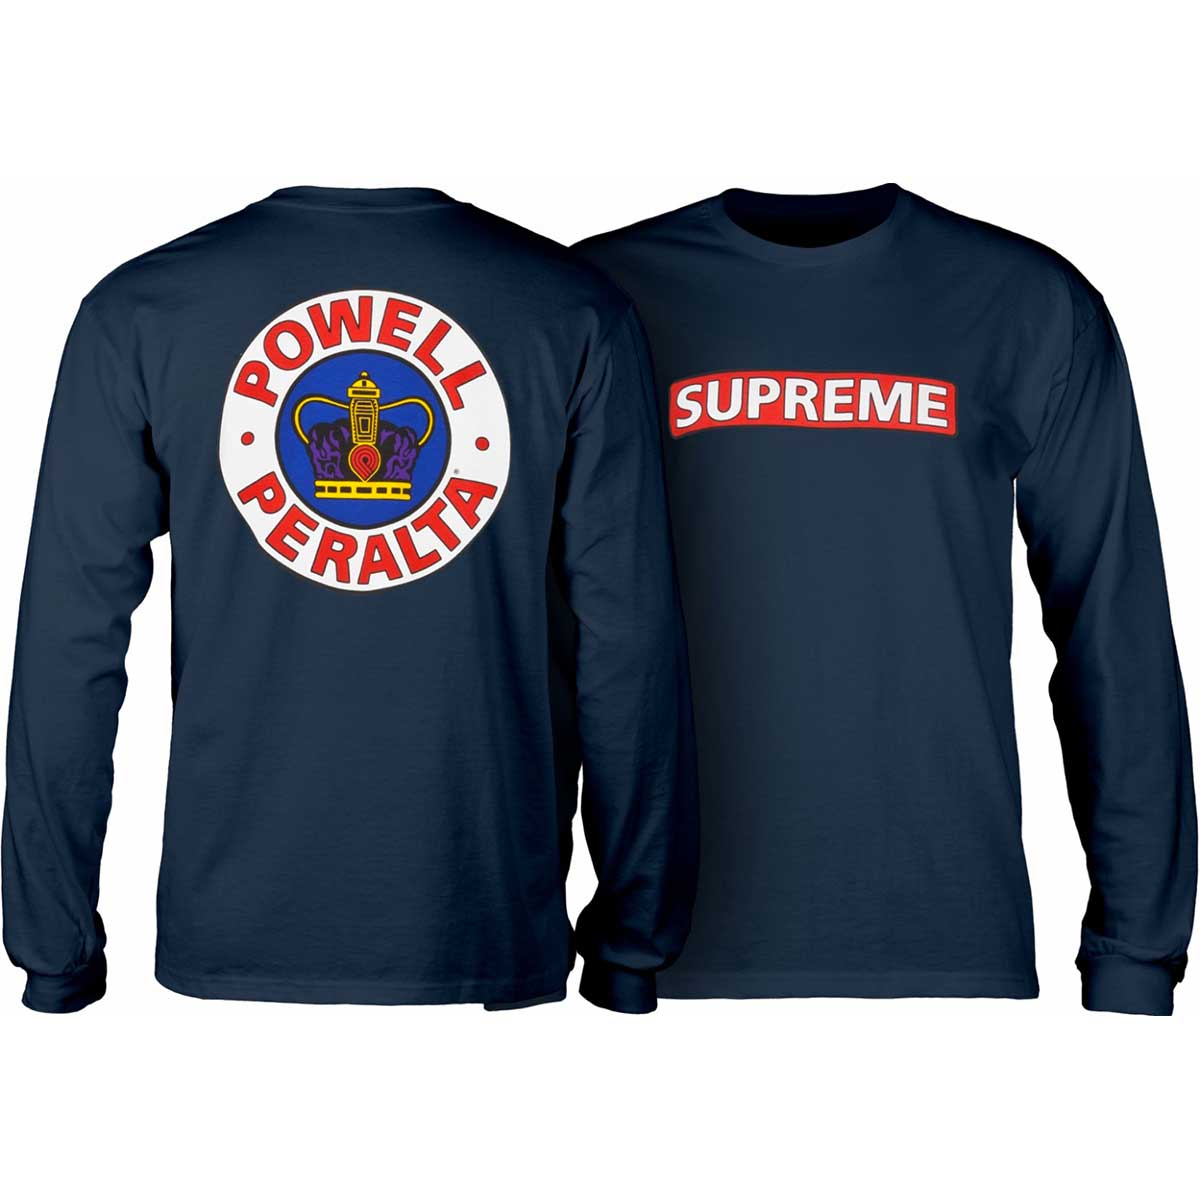 Powell-Peralta Supreme Long Sleeve T-Shirt - Powder Blue